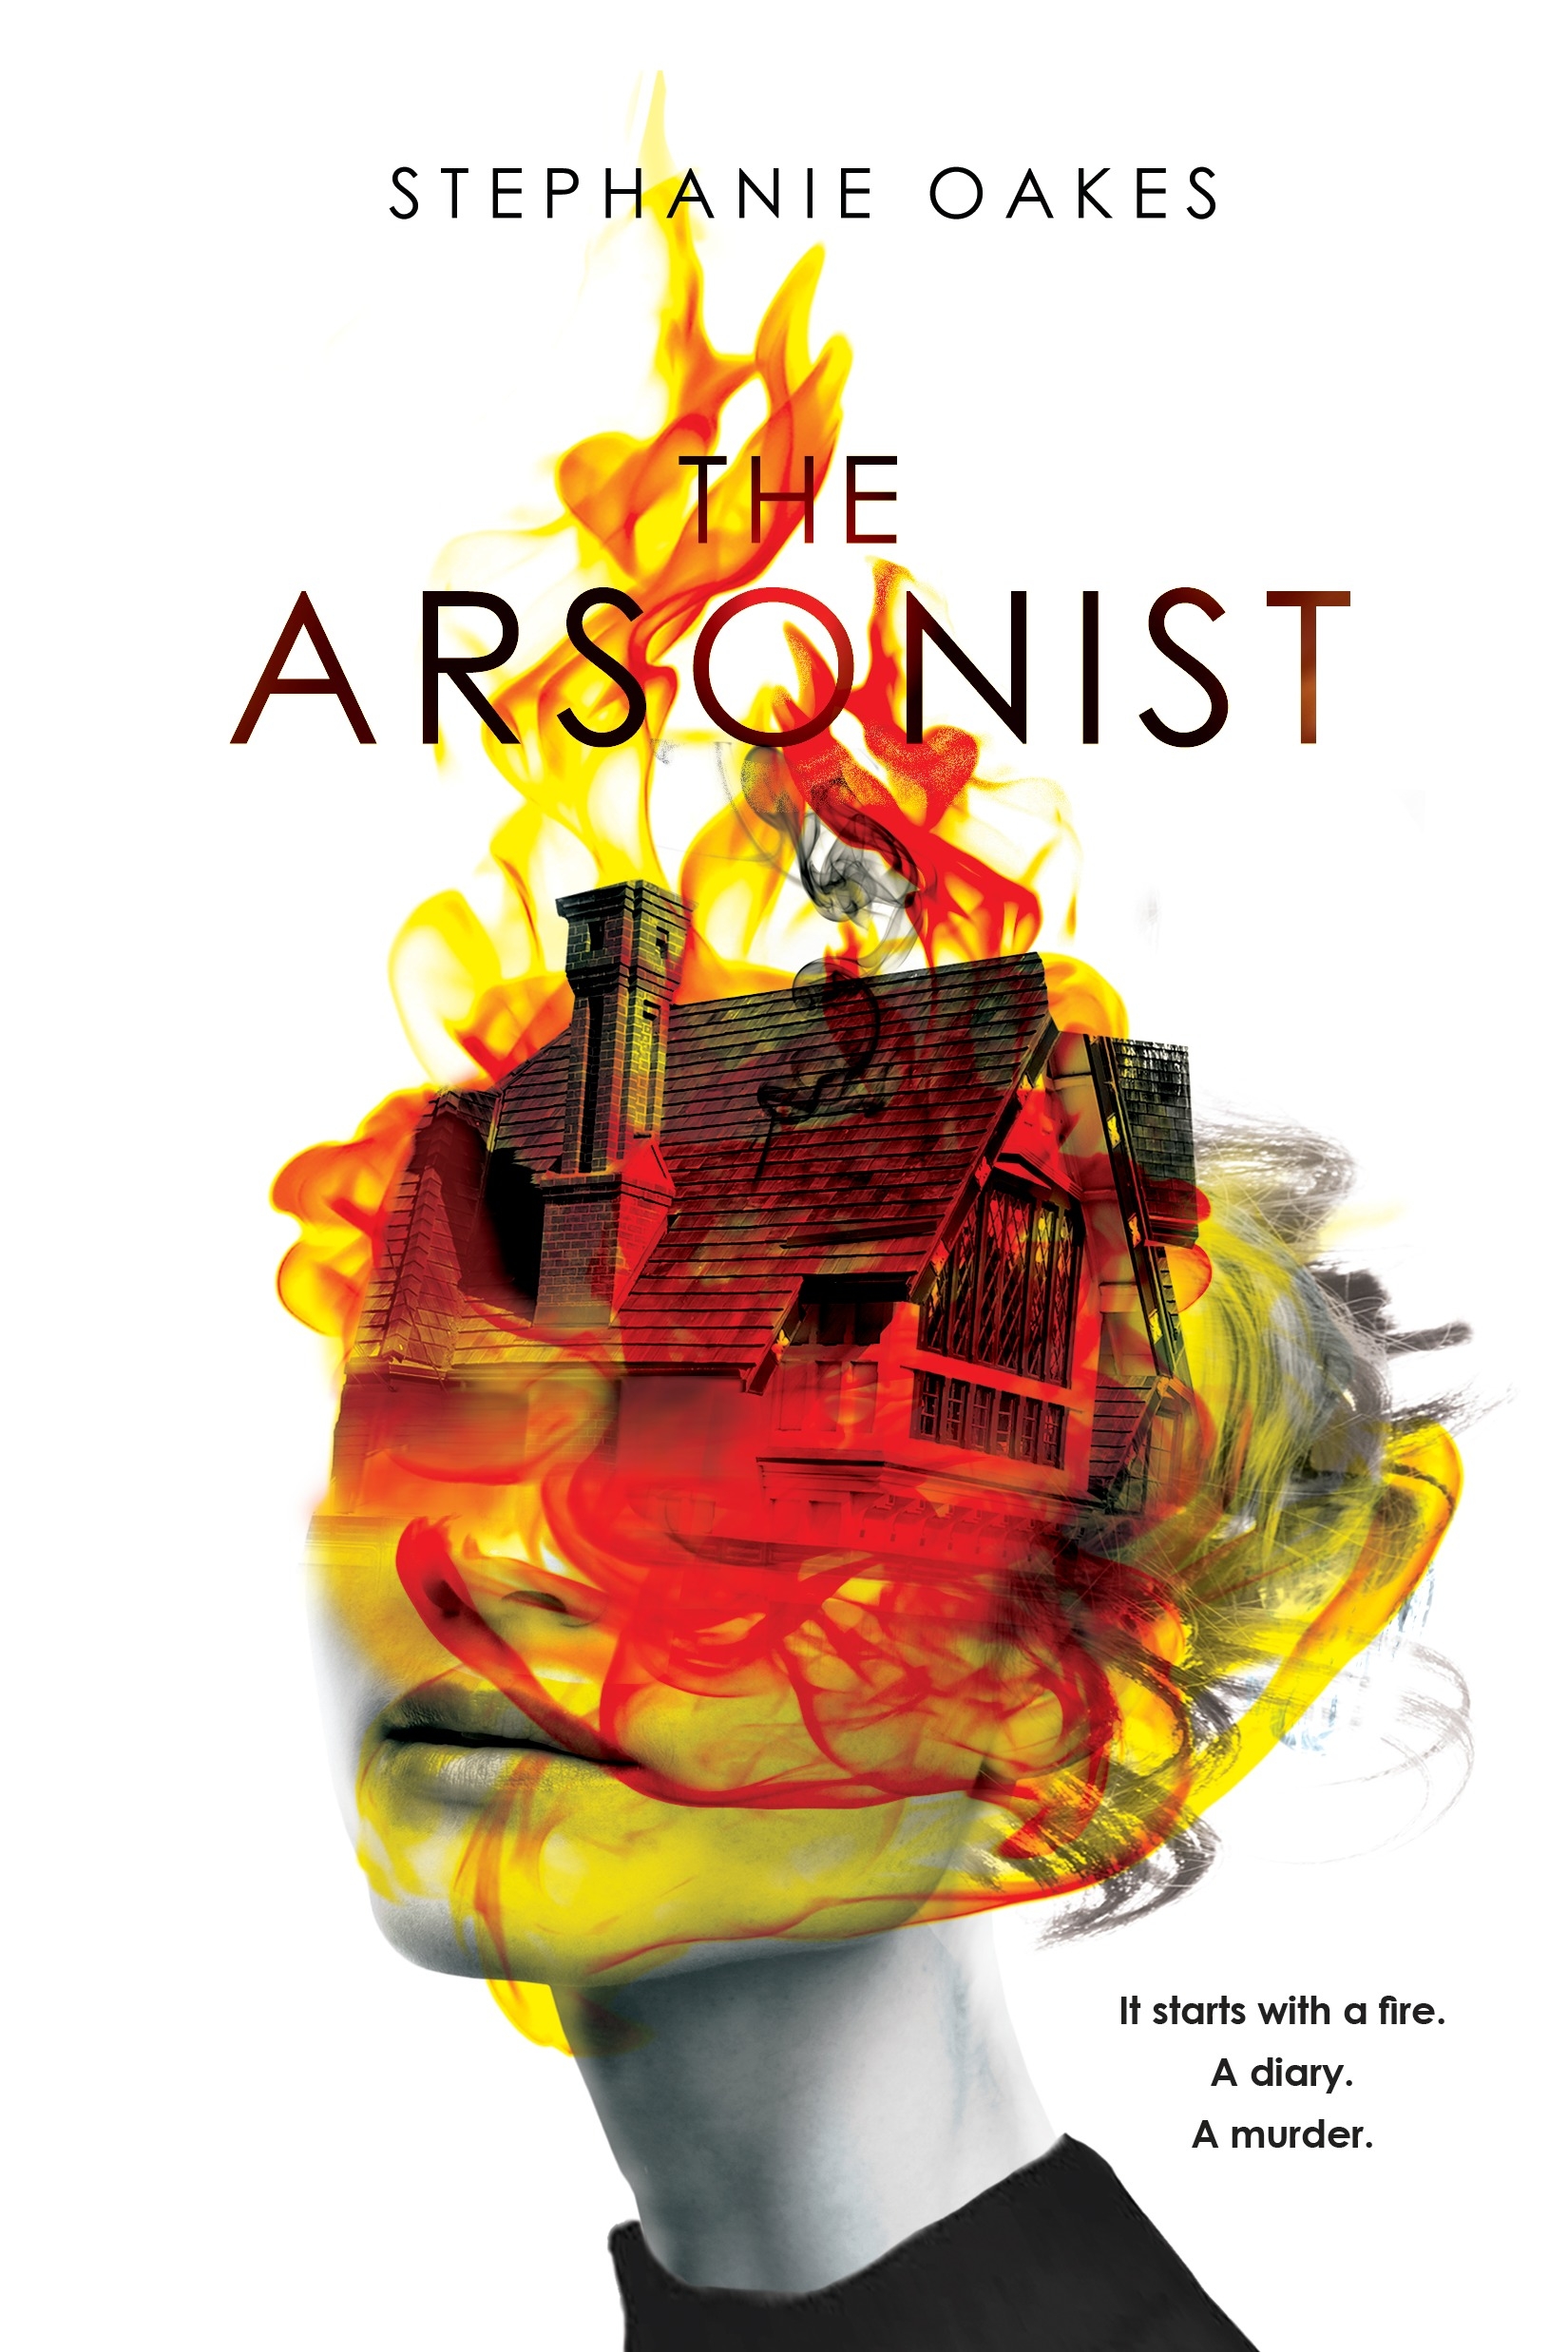 The Arsonist by Chloe Hooper